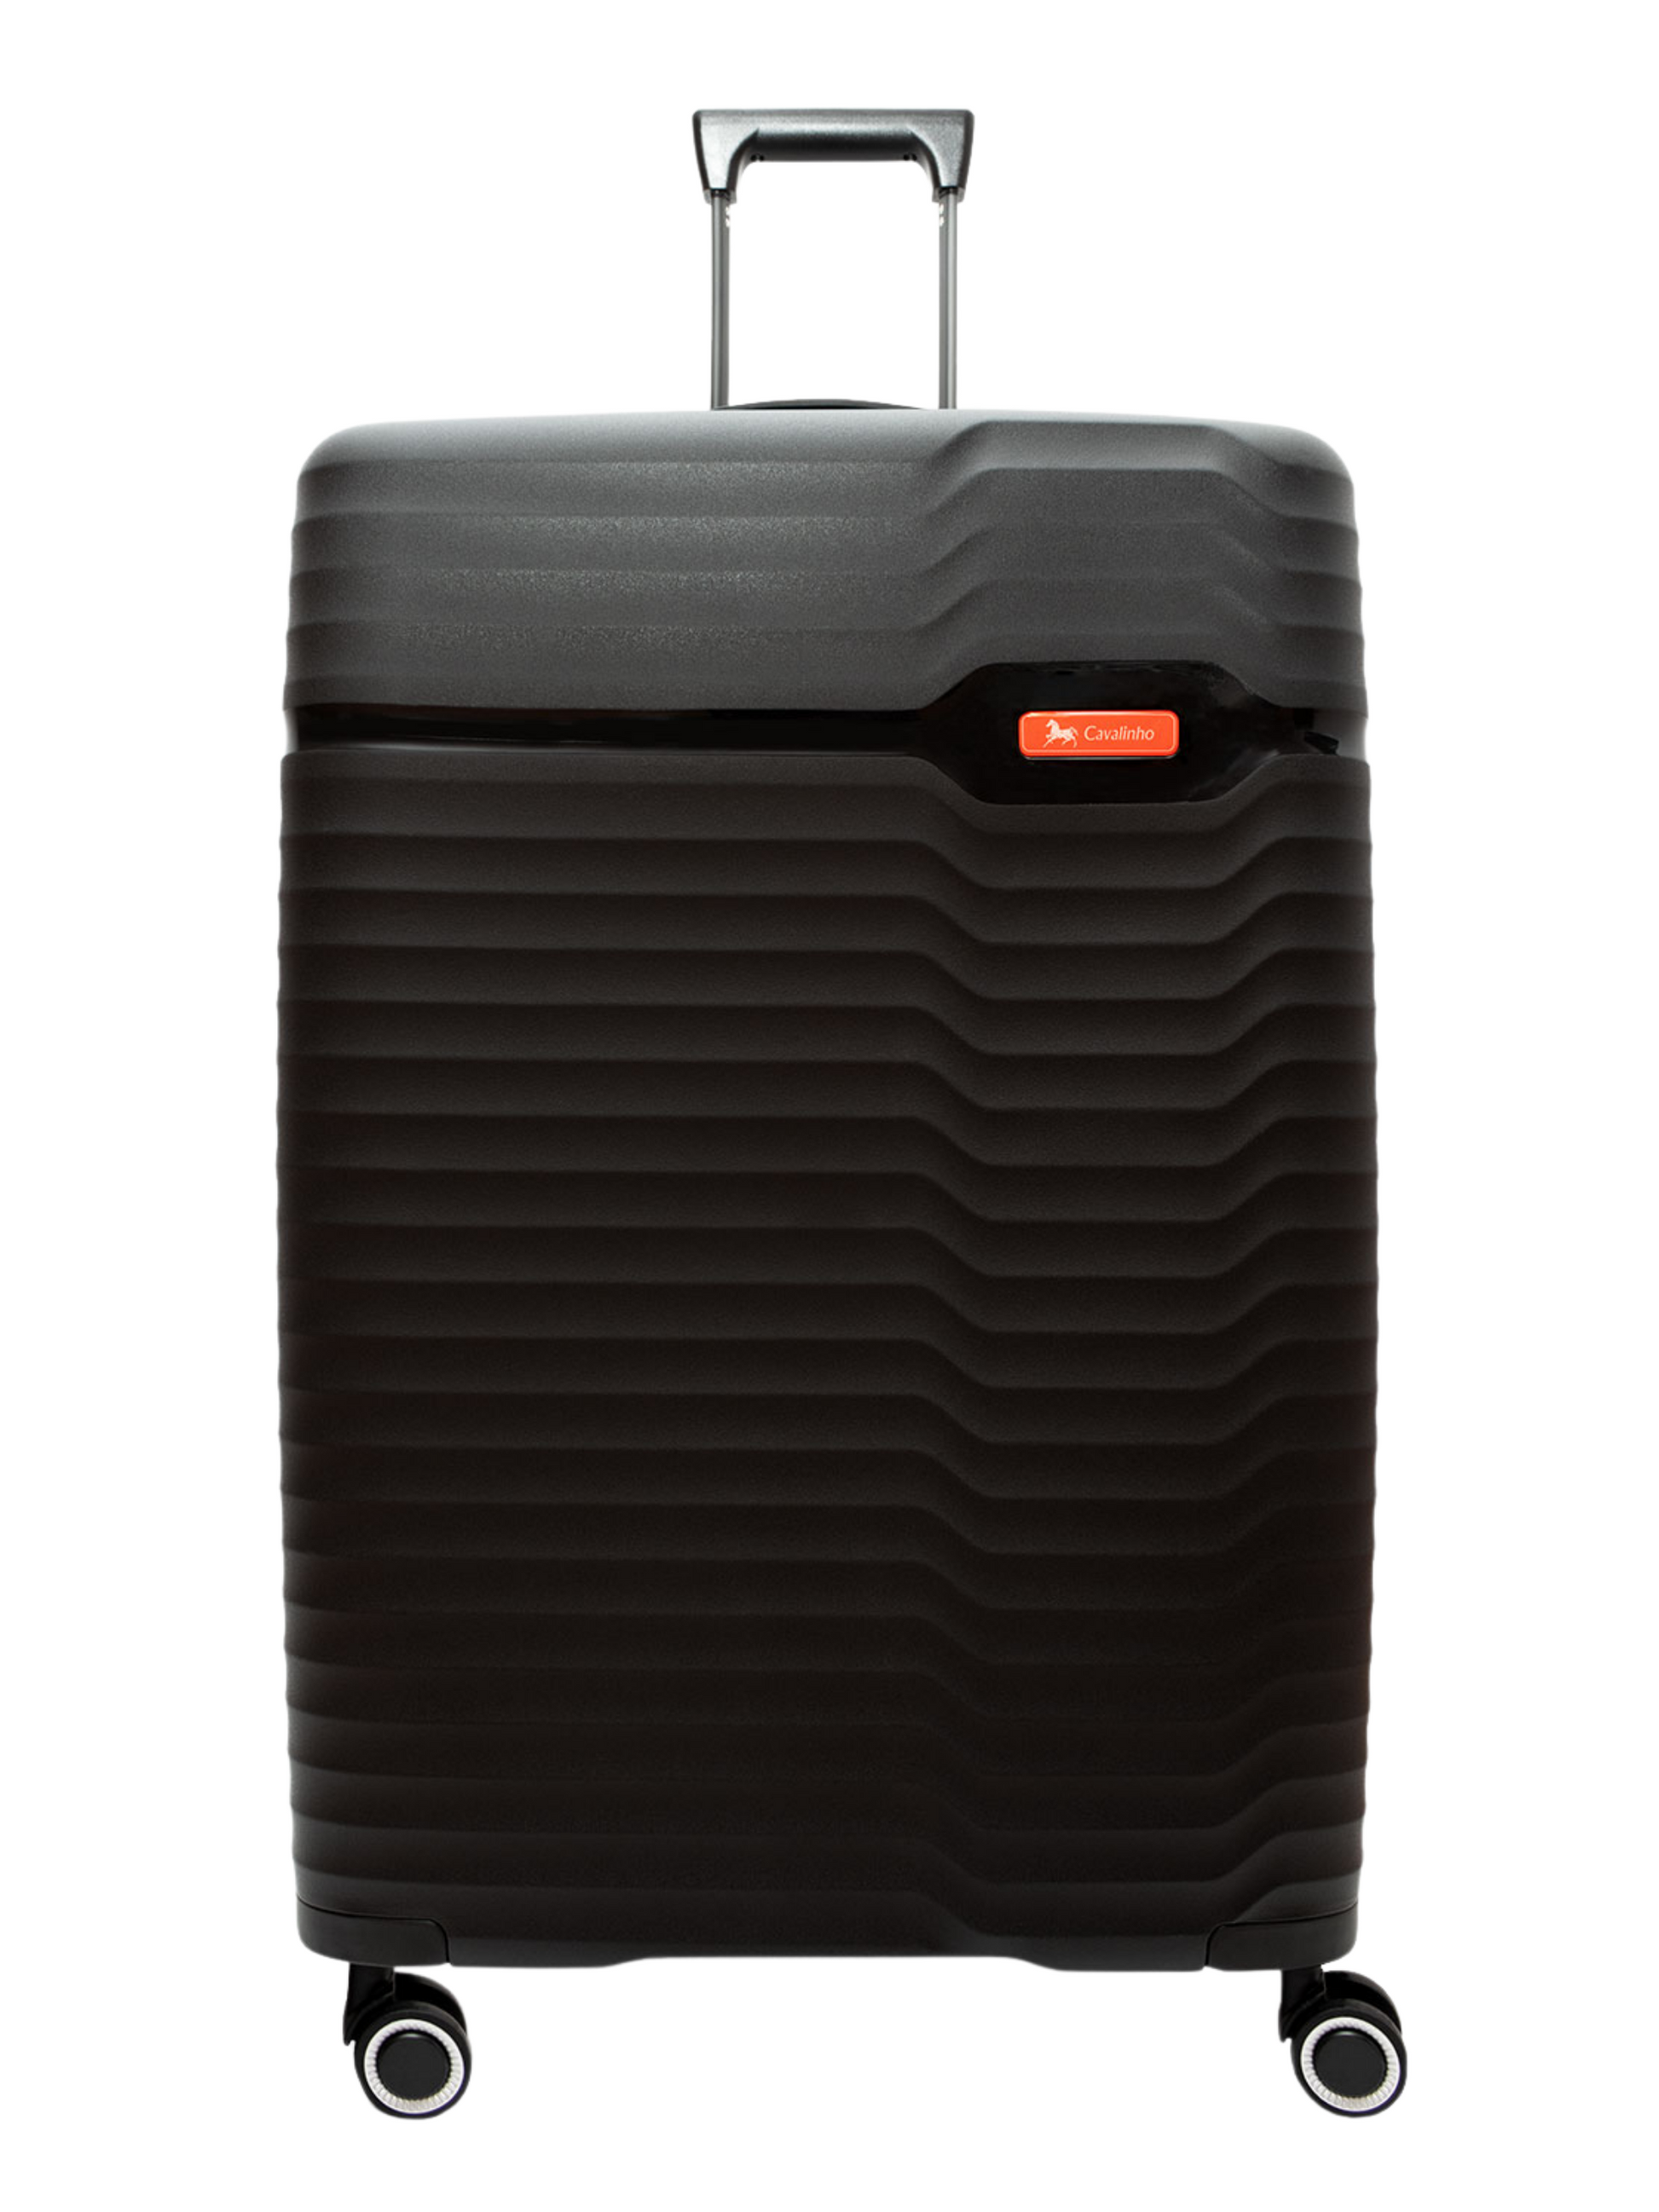 Cavalinho Check-in Hardside Luggage (24" or 28") - 28 inch Black - 68010003.01.28